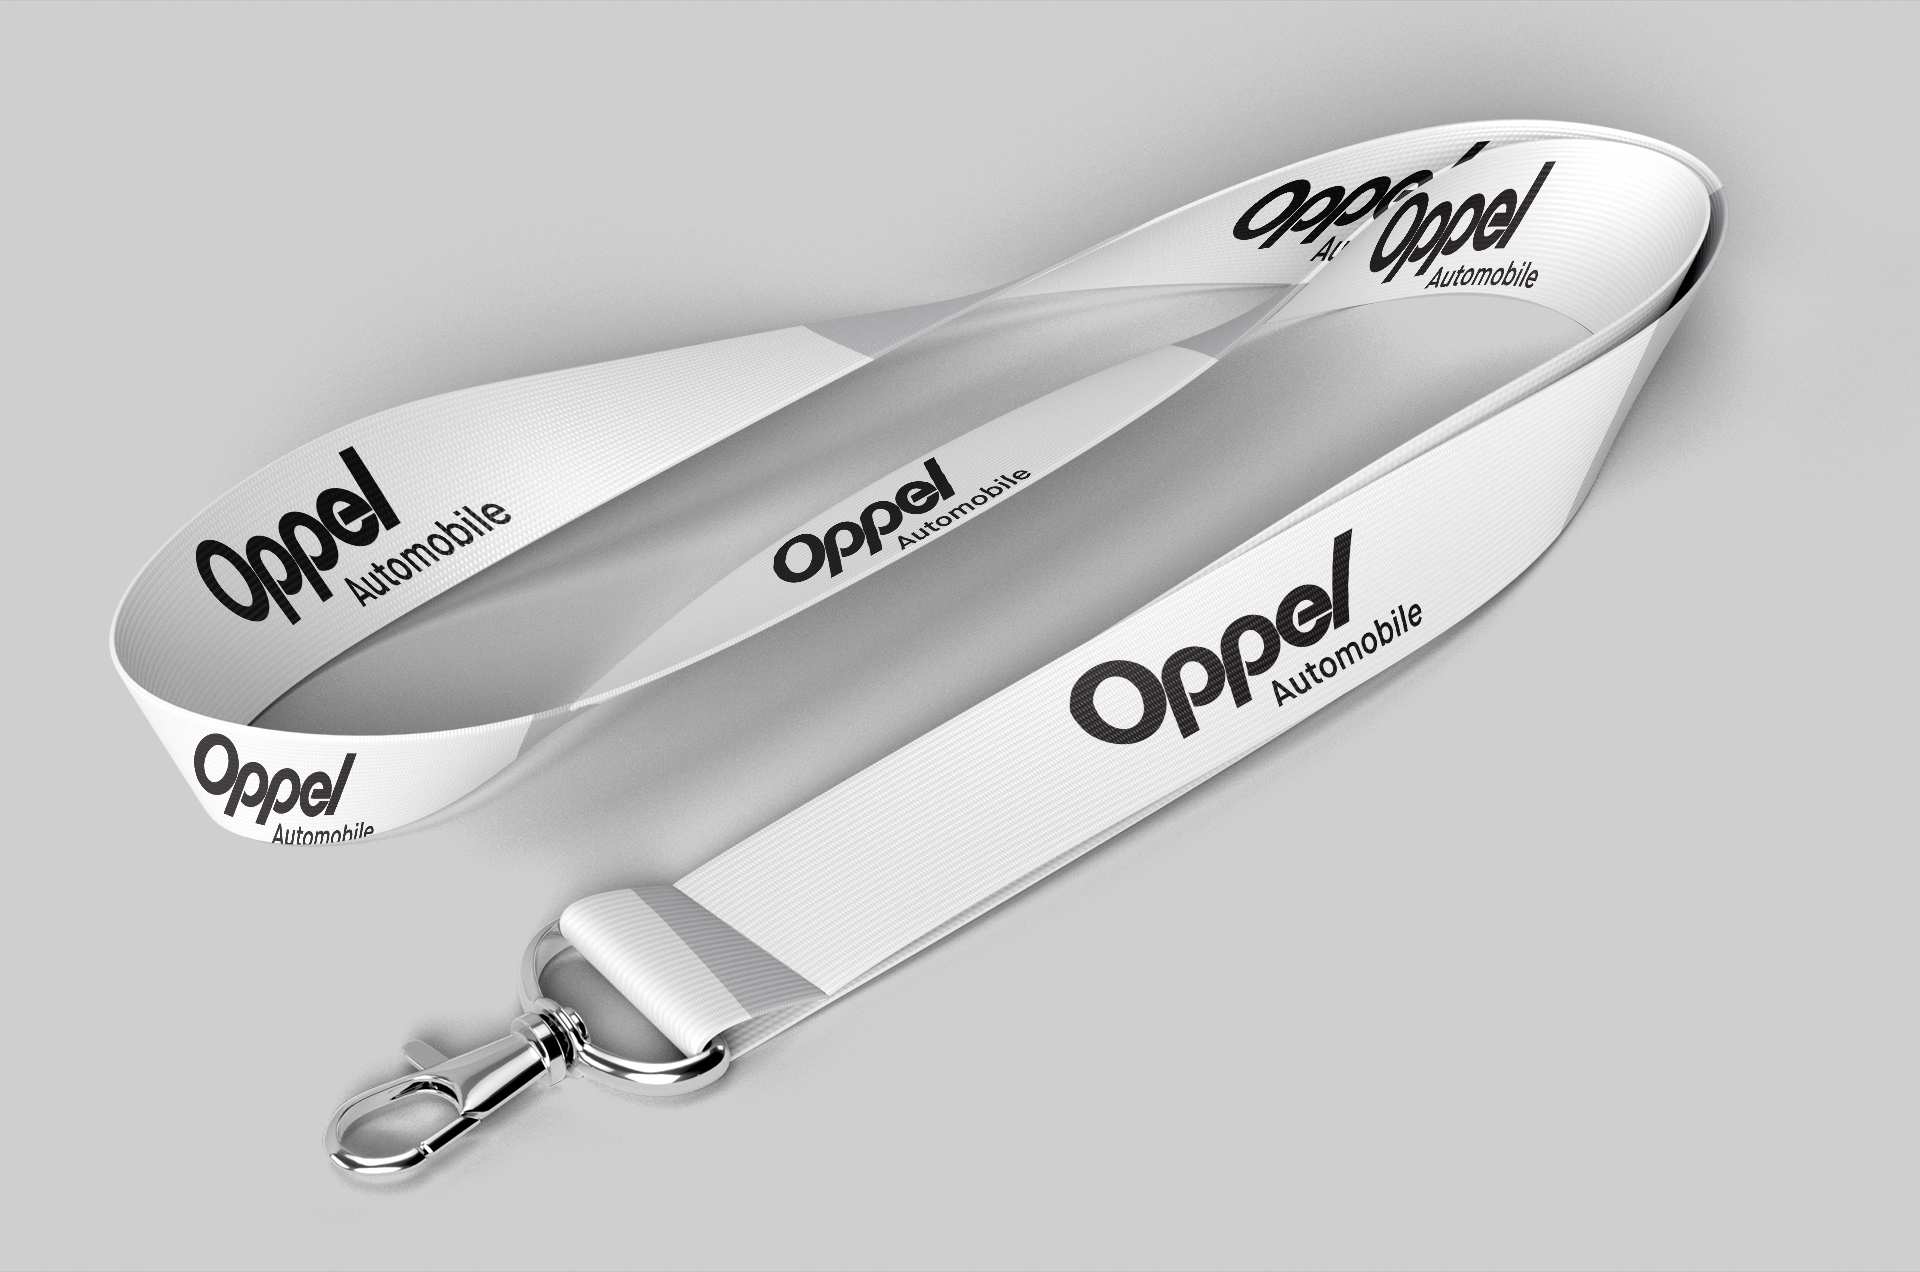 Oppel Automobile – Corporate Design Autohaus, Lanyard